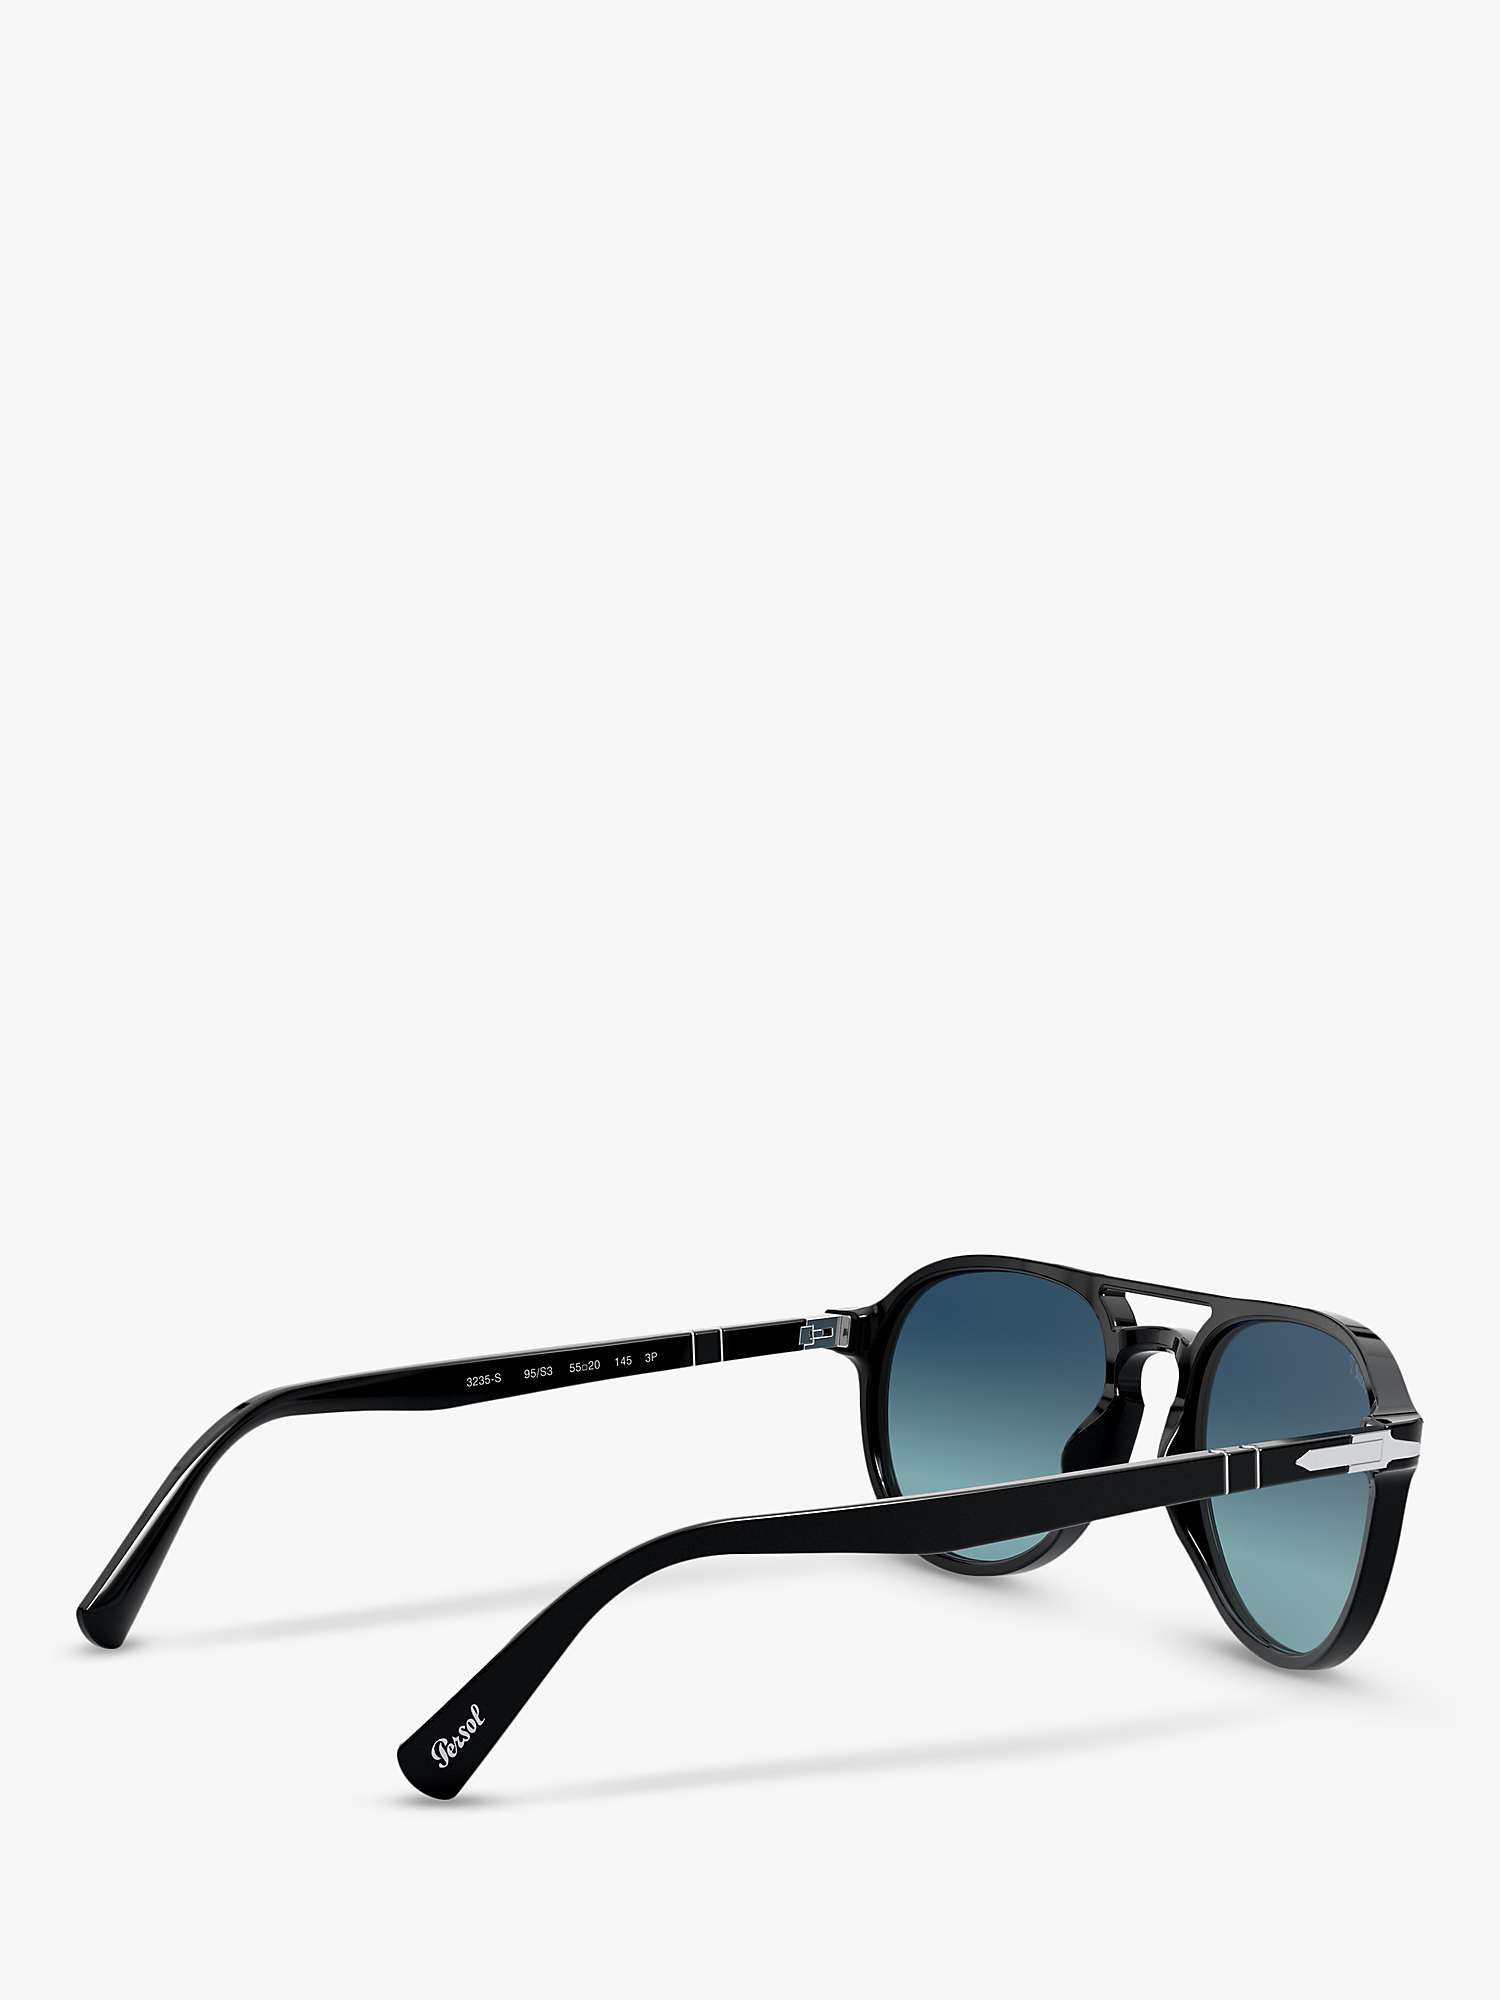 Buy Persol PO3235S Women's Polarised Aviator Sunglasses, Black/Blue Gradient Online at johnlewis.com